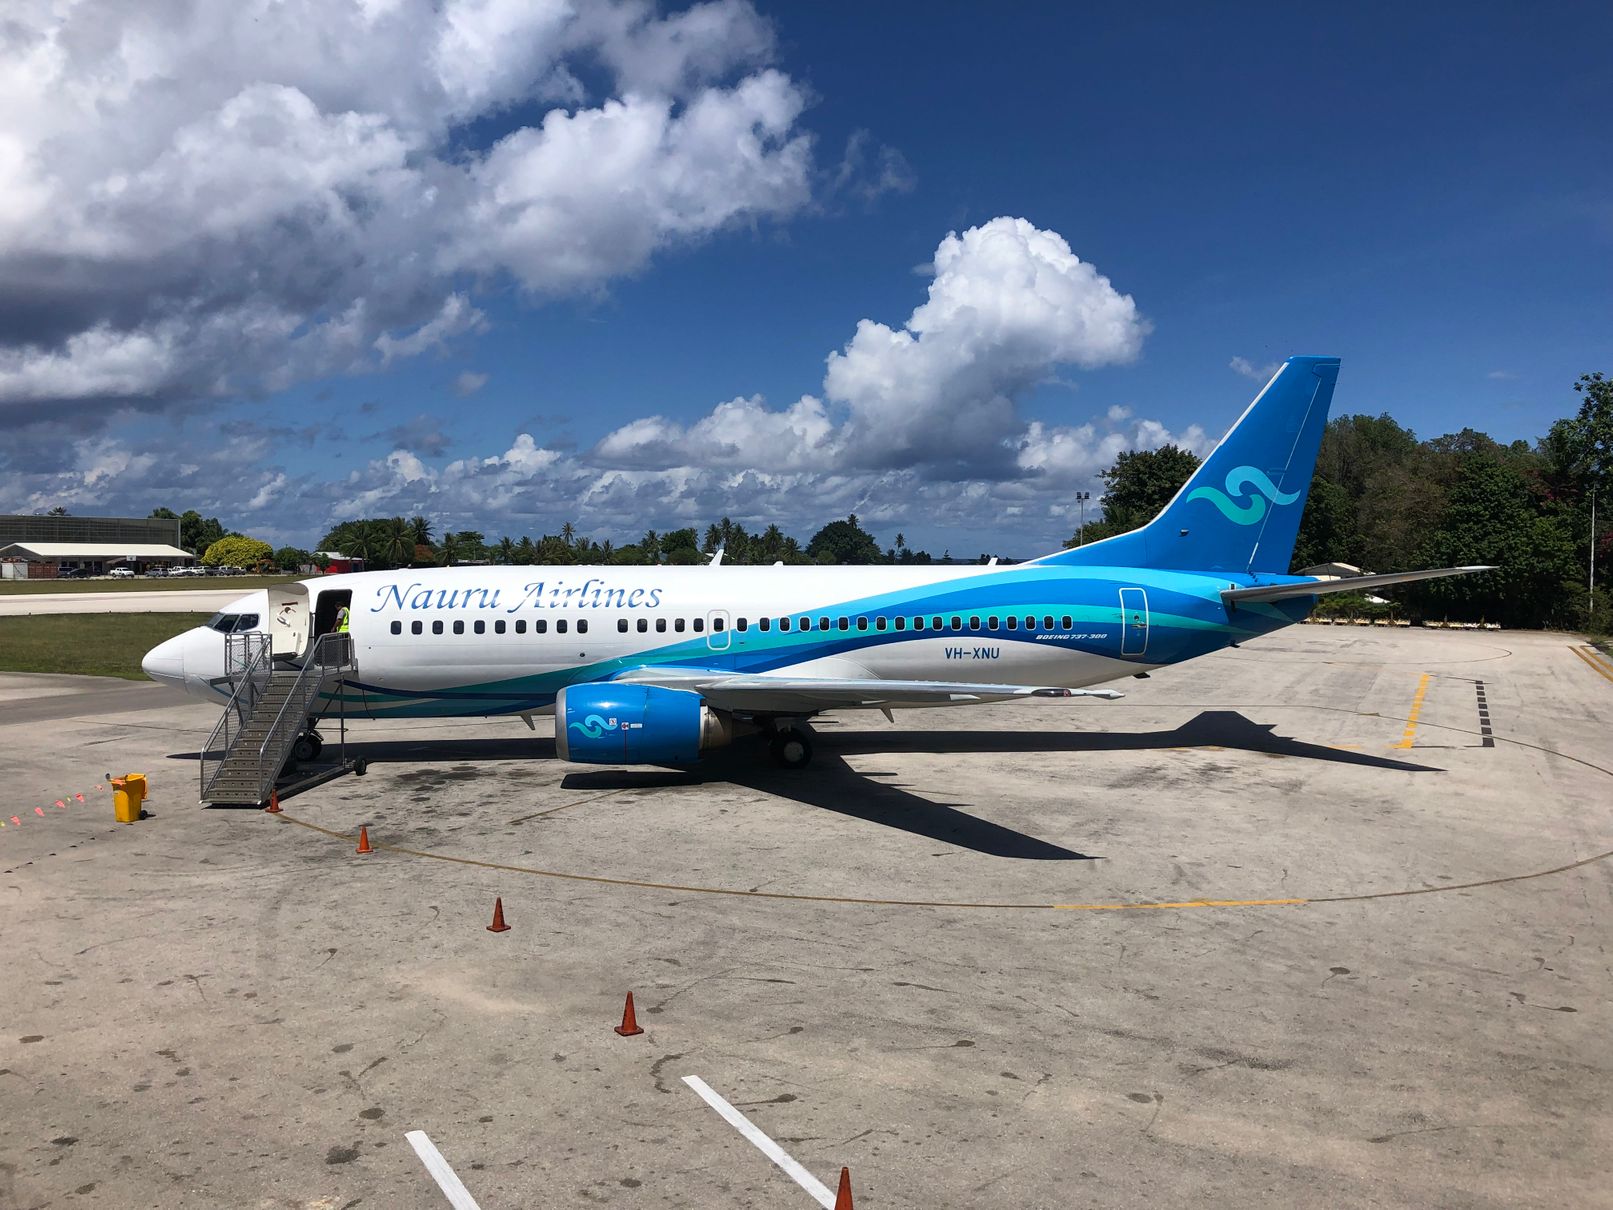 aircraft of Nauru airlines at the airport